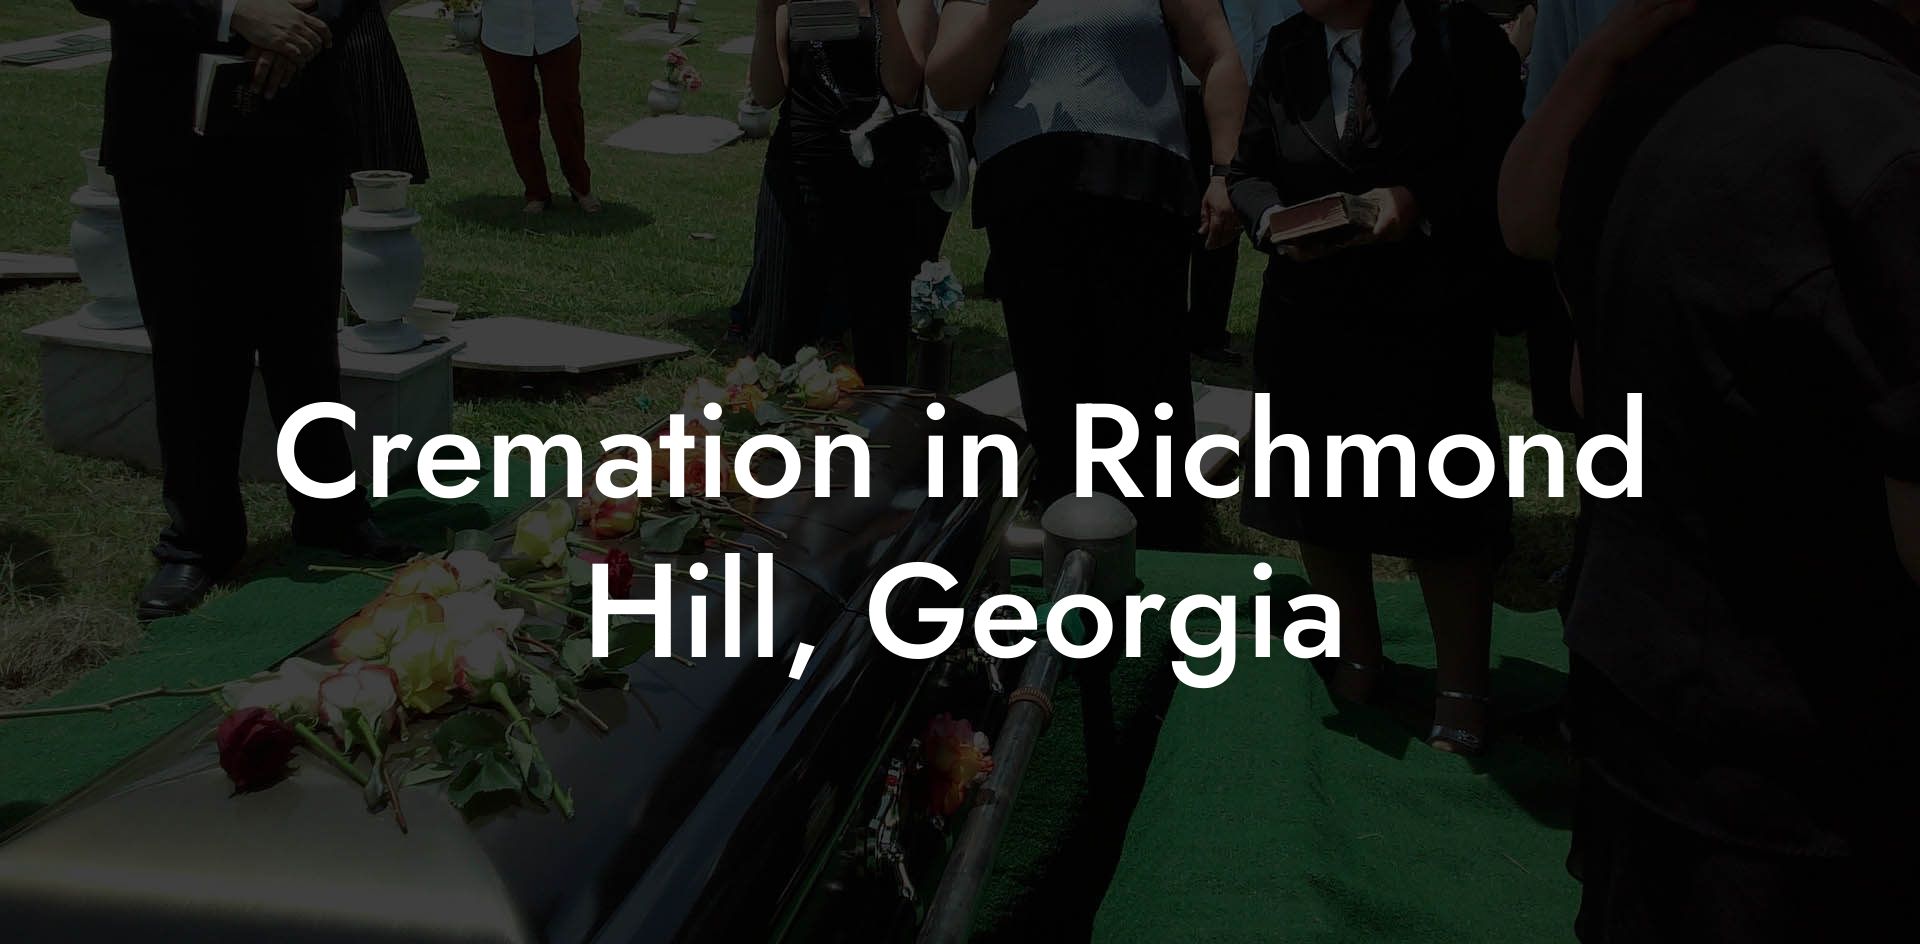 Cremation in Richmond Hill, Georgia